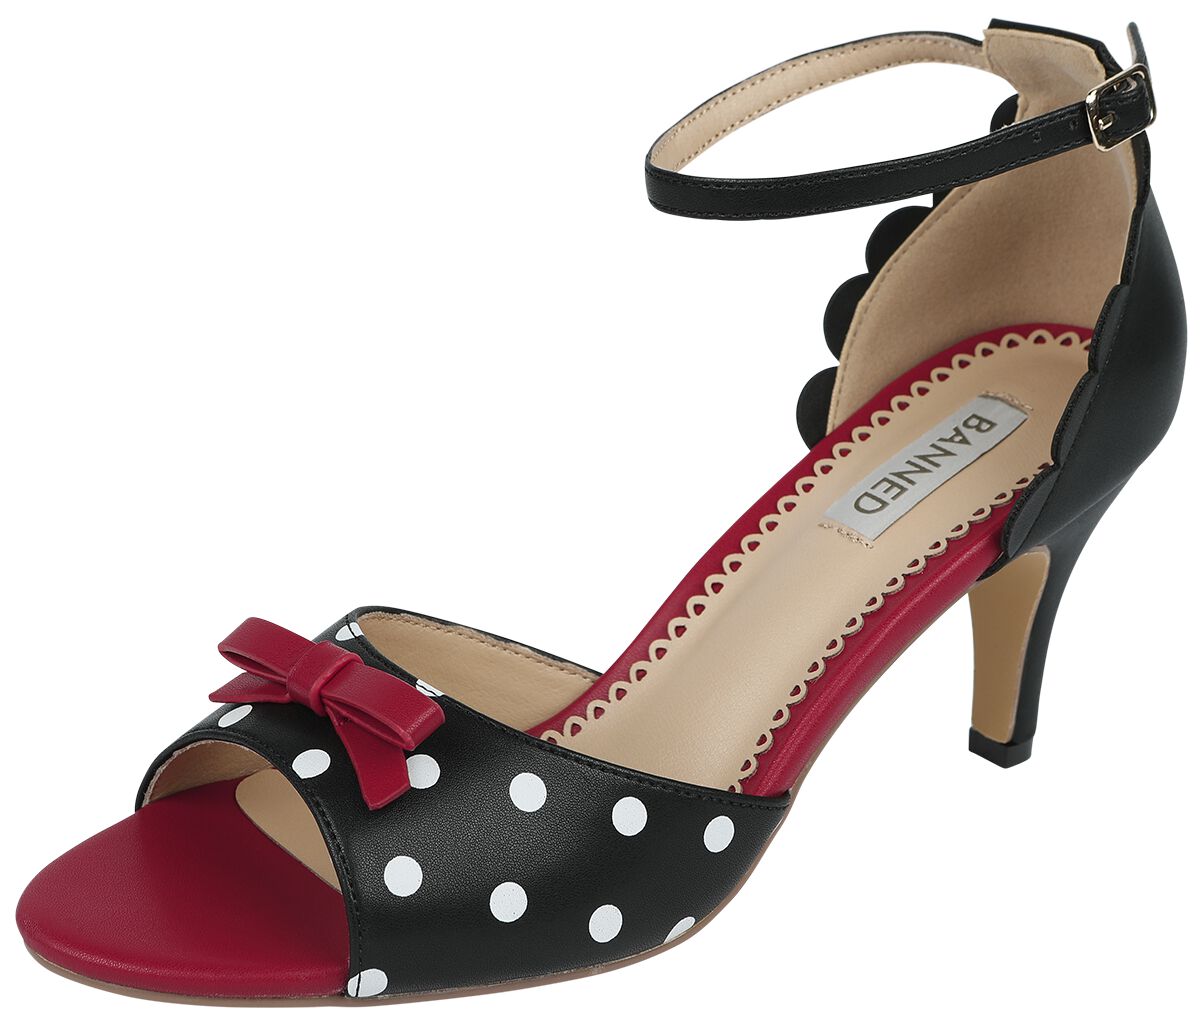 Banned Retro Poppy Polka Open Toe Sandals High Heel schwarz rot in EU38